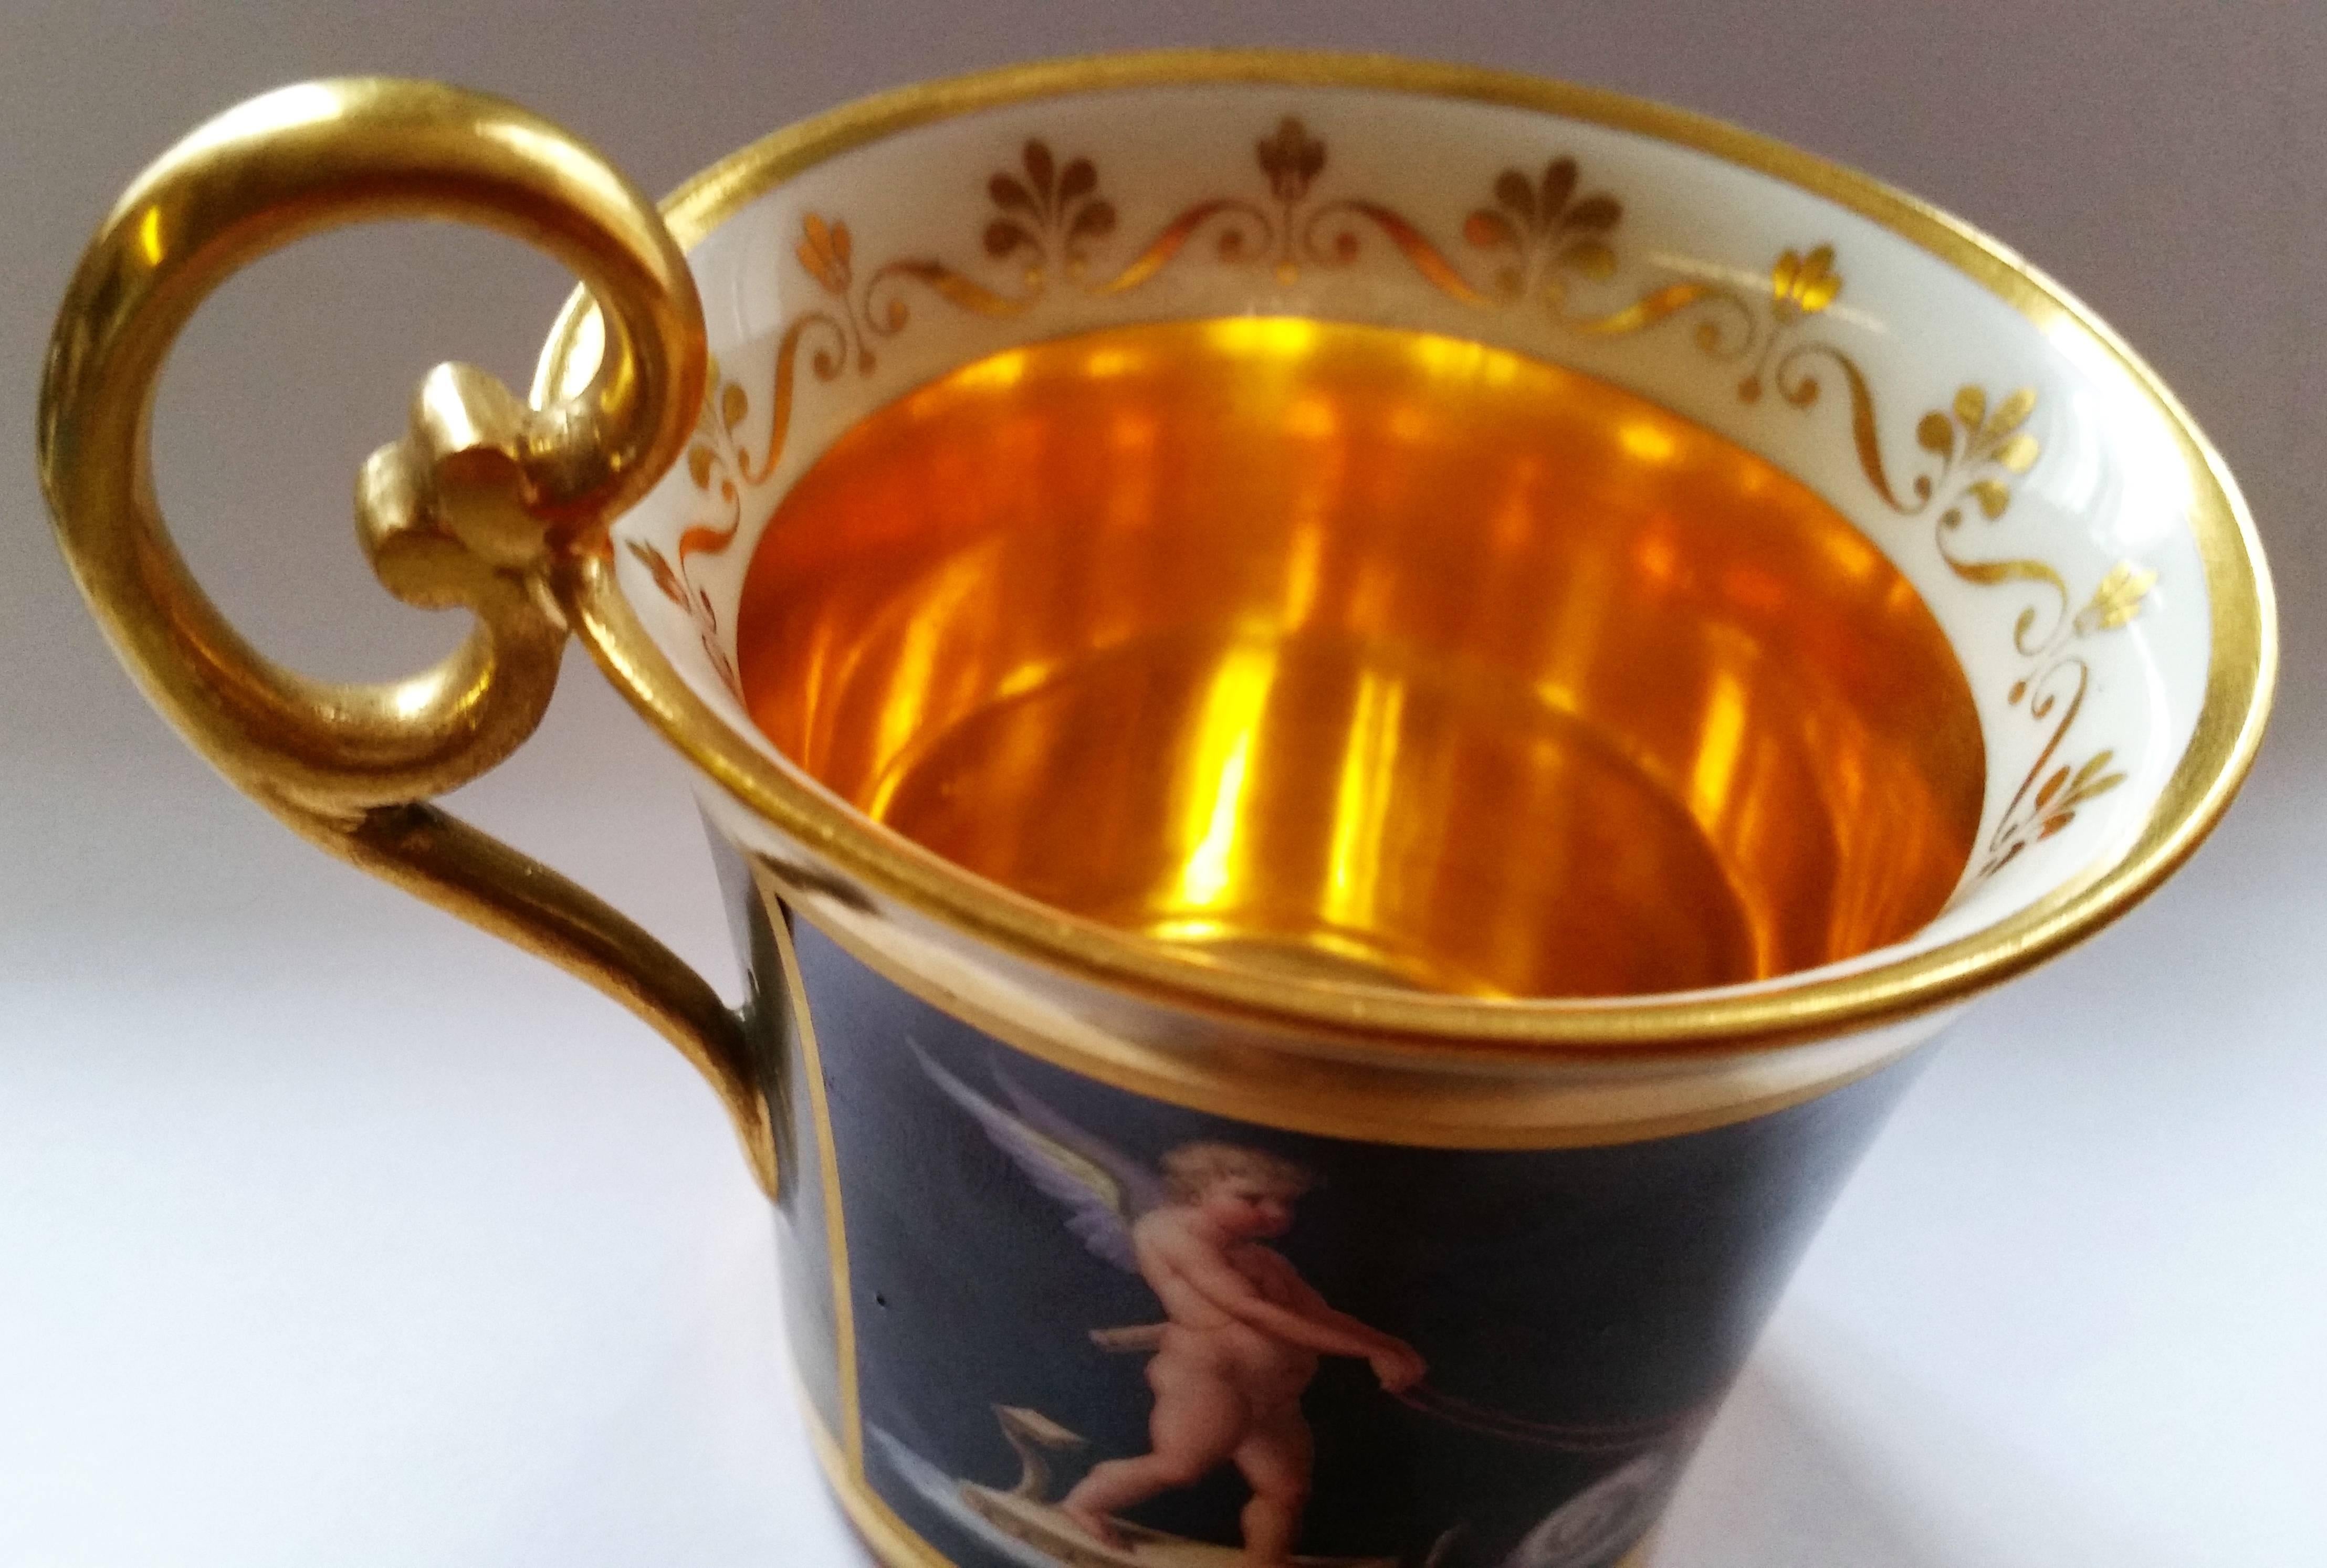 Biedermeier Vienna Imperial Porcelain Cup Saucer Cherubs Driving Chariots Dated 1814 Austria